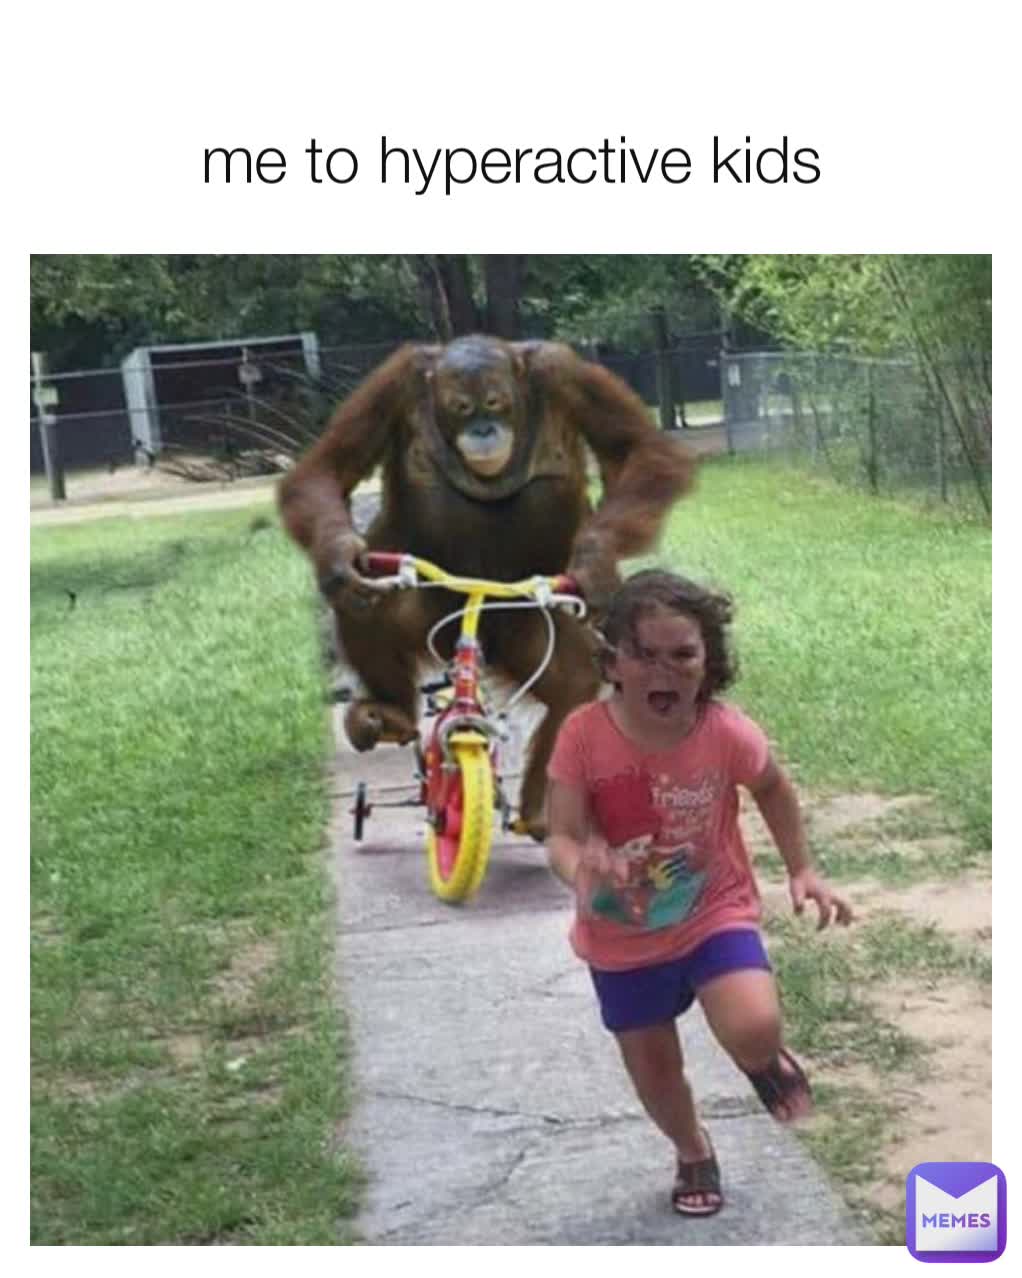 me to hyperactive kids